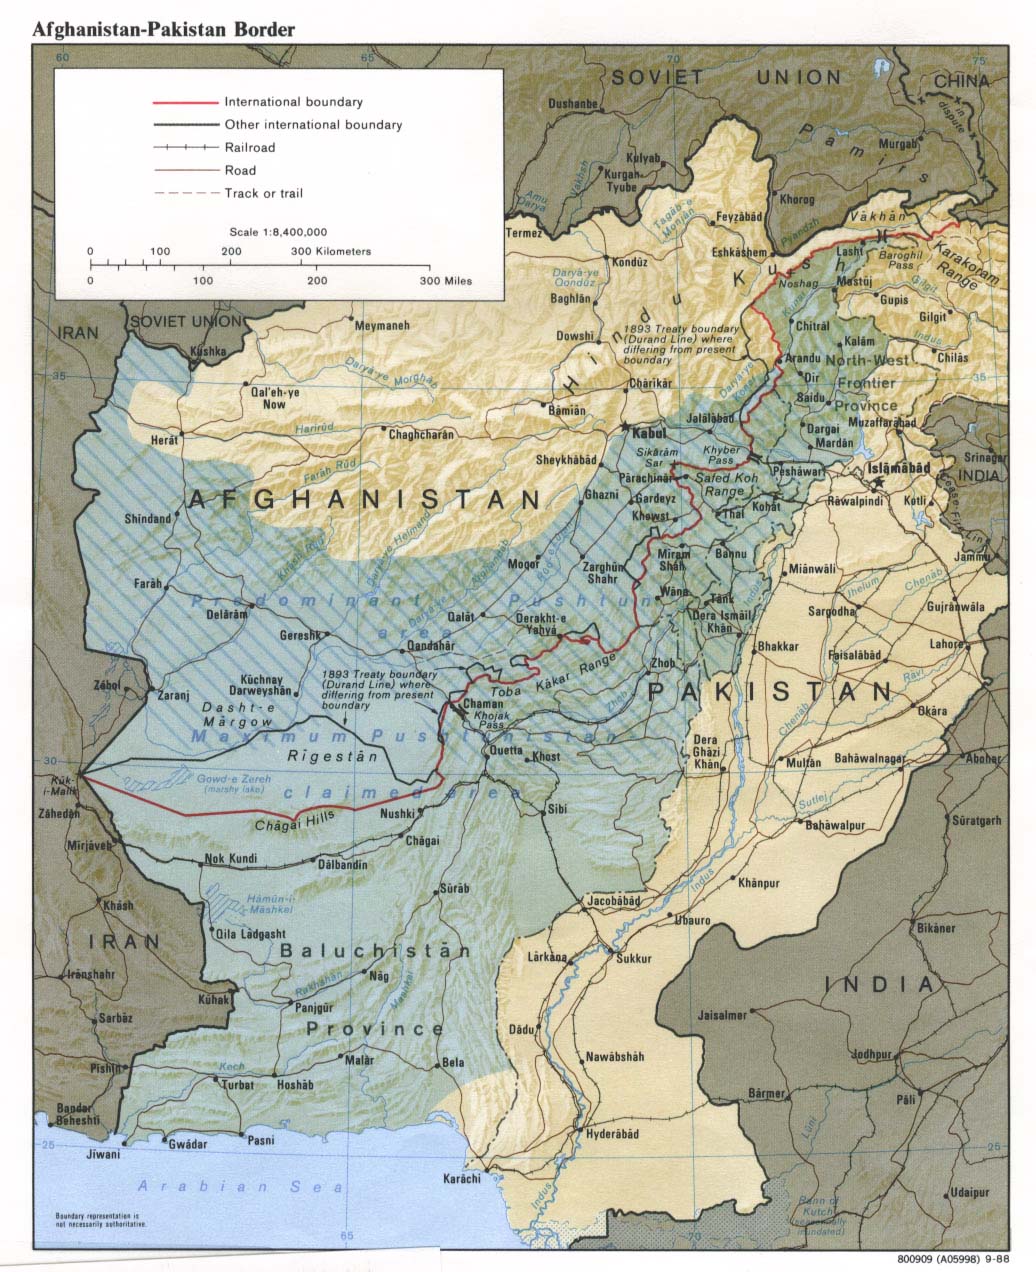 Durand_Line_Border_Between_Afghanistan_And_Pakistan.jpg